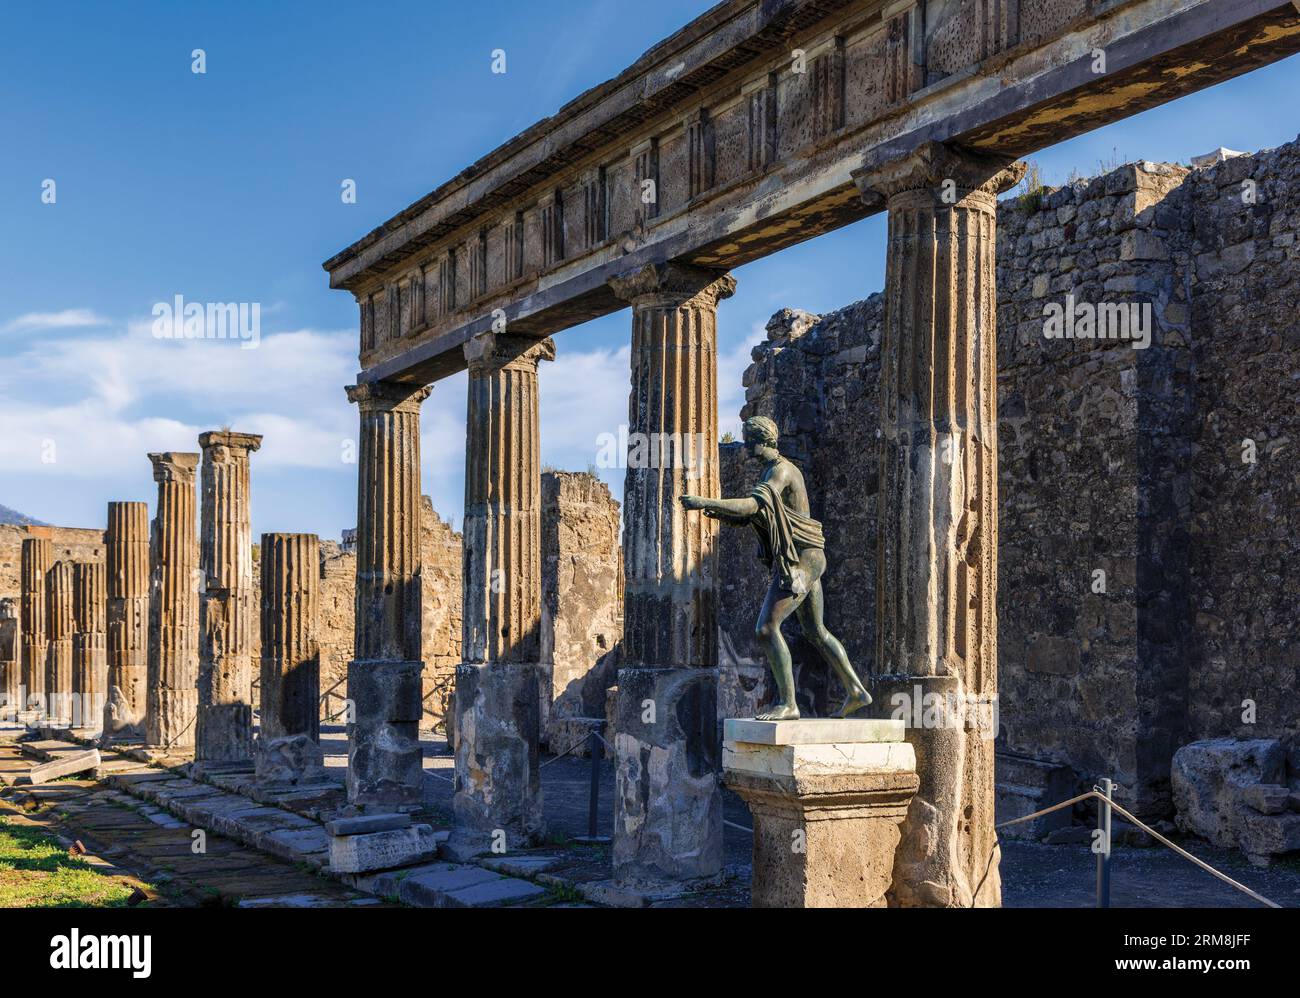 Pompeii Archaeological Site, Campania, Italy.  The Sanctuary of Apollo or Temple of Apollo.  Santuario di Apollo.  Tempio di Apollo.  The bronze statu Stock Photo